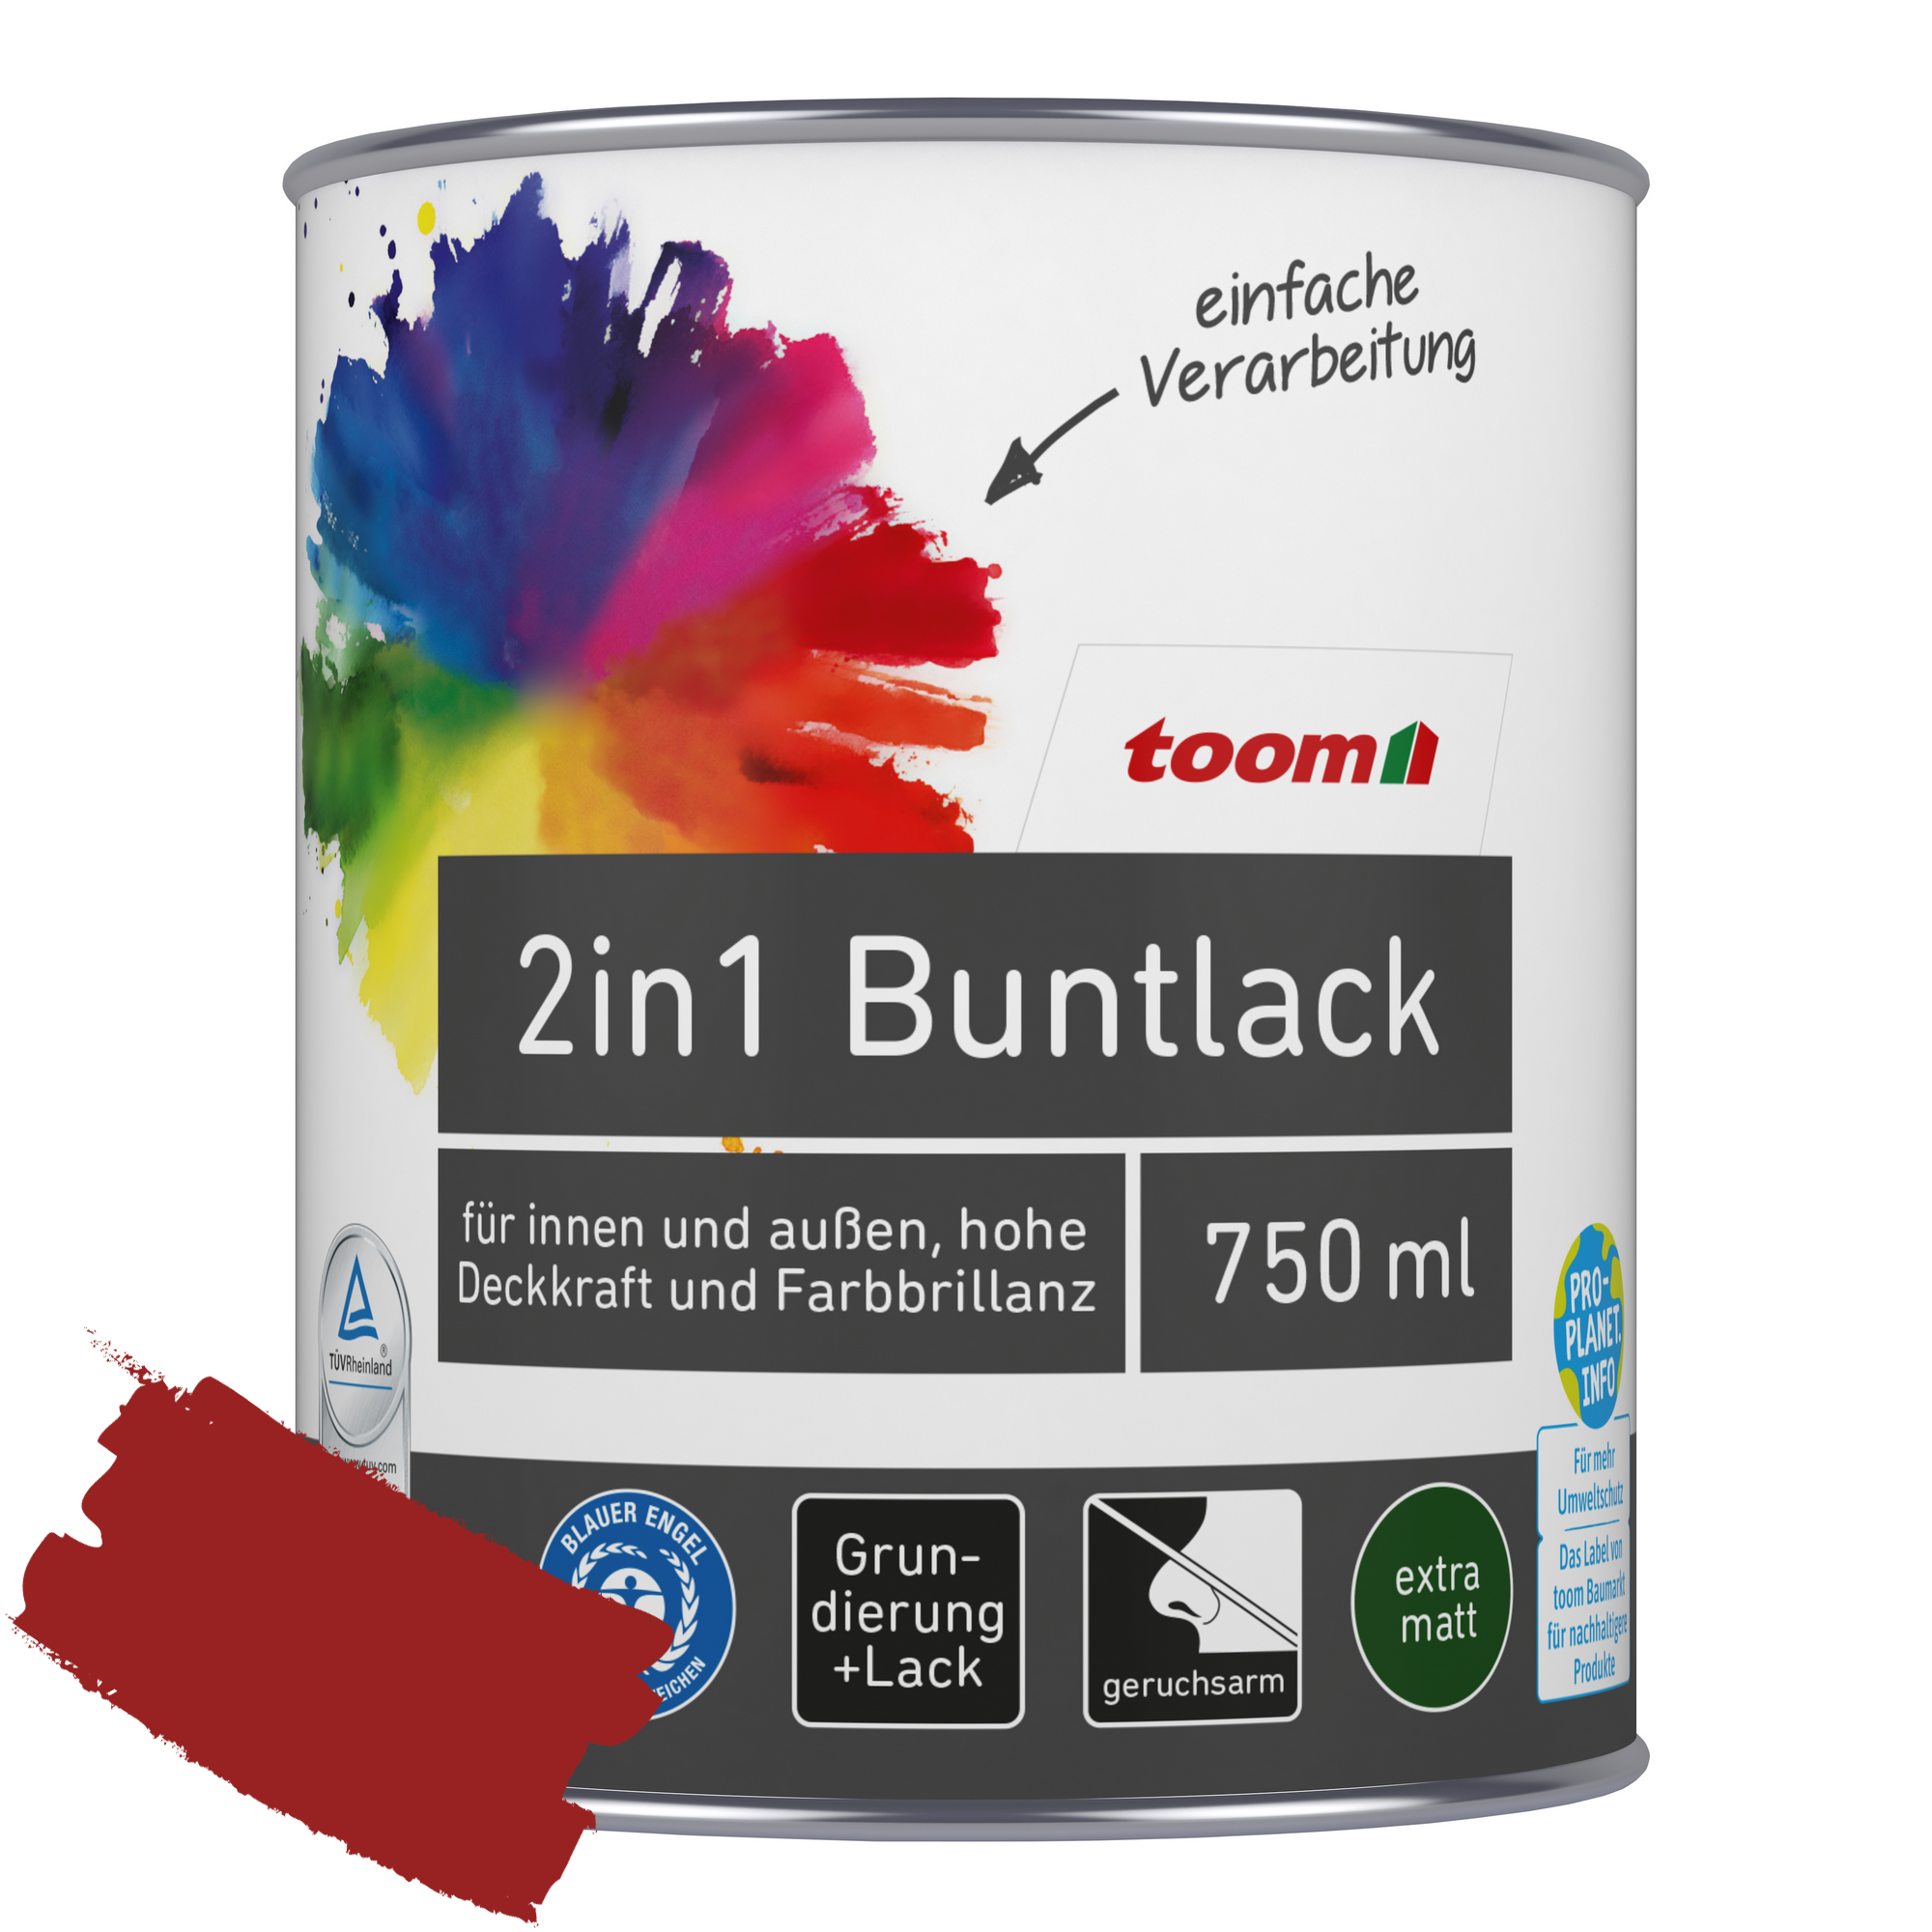 2in1 Buntlack 'Mohnblume' feuerrot matt 750 ml + product picture